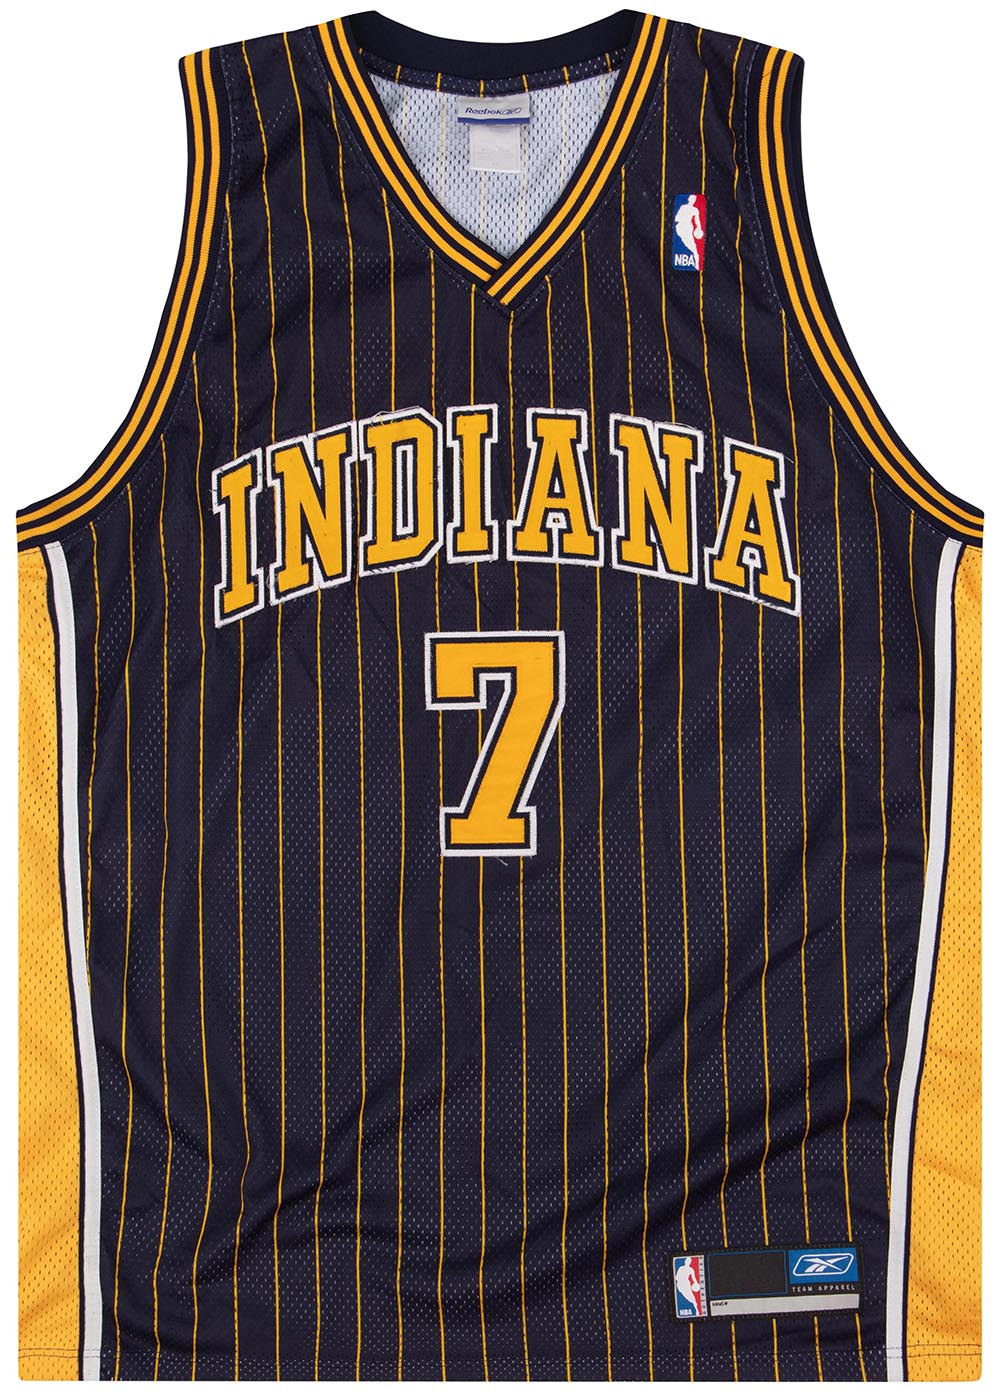 Indiana Pacers: Jermaine O'Neal 2002/03 White Pinstripe Reebok